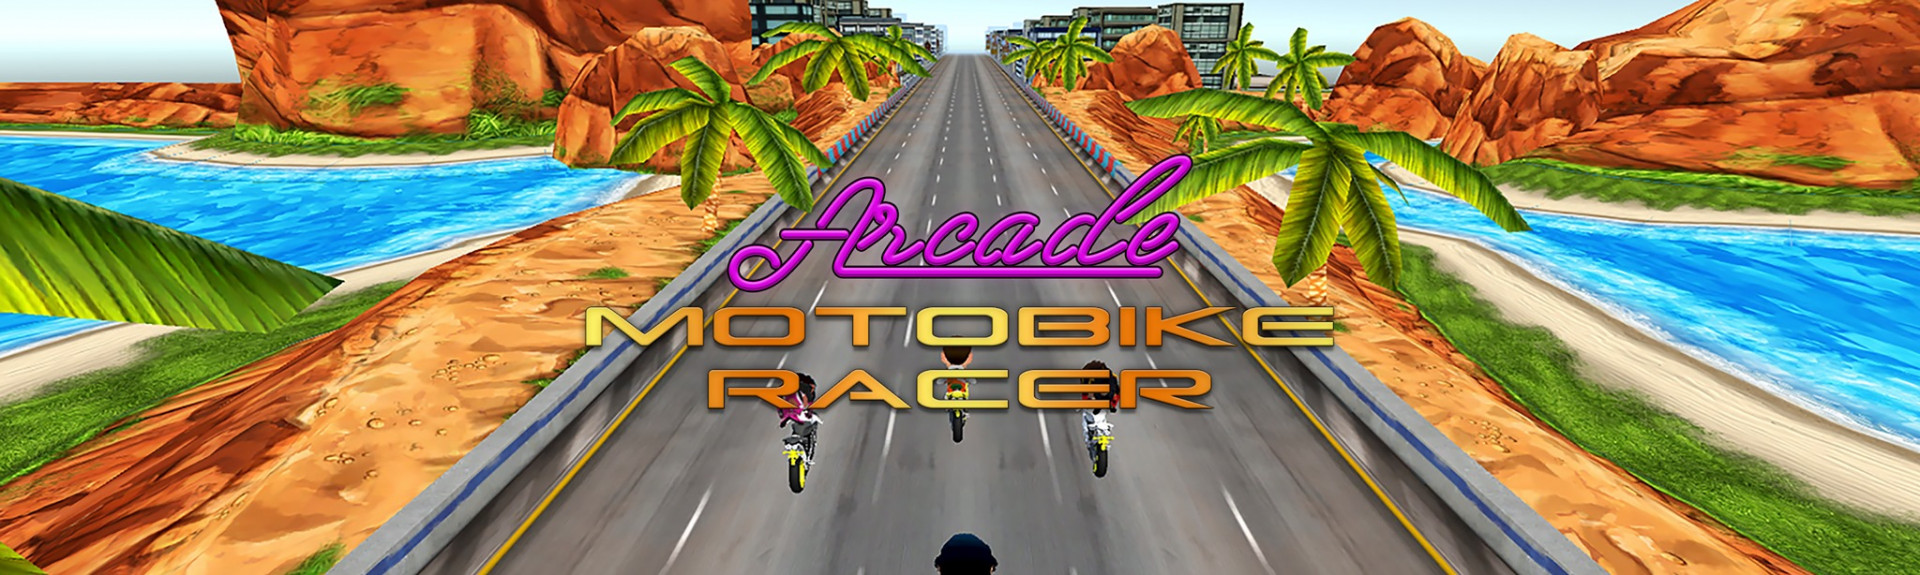 Arcade Motobike Racer